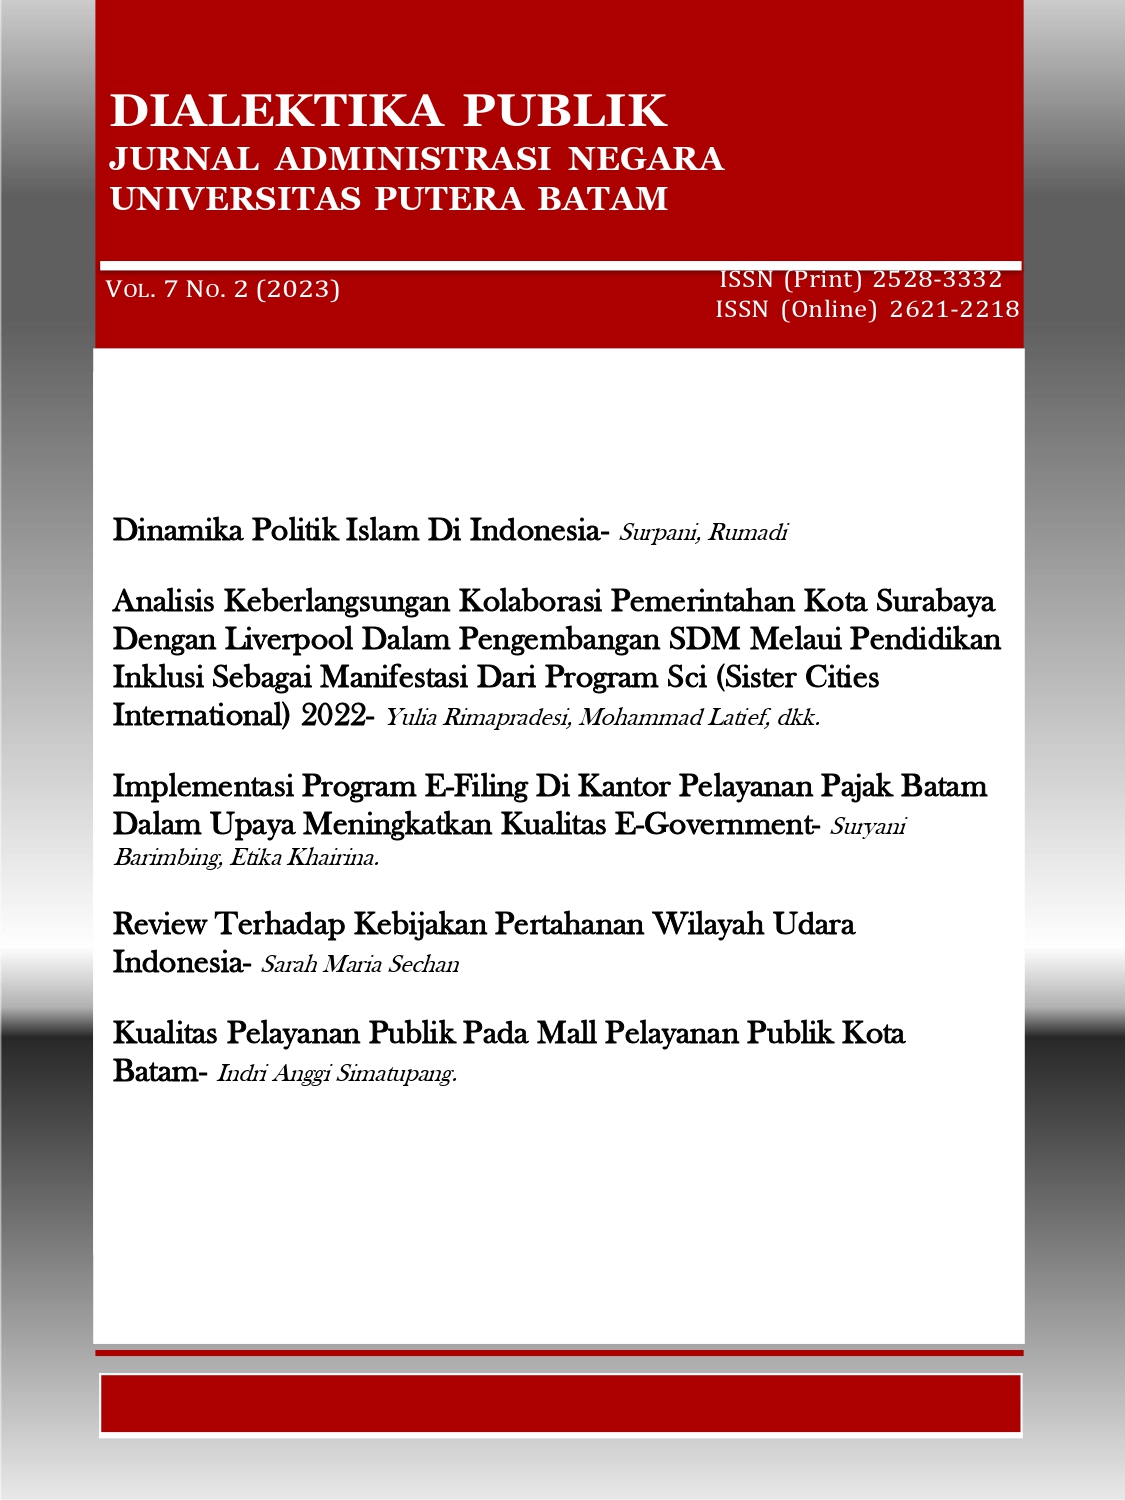 					View Vol. 7 No. 2 (2023): Dialektika Publik : Pelayanan Publik Dan Kebijakan Publik
				